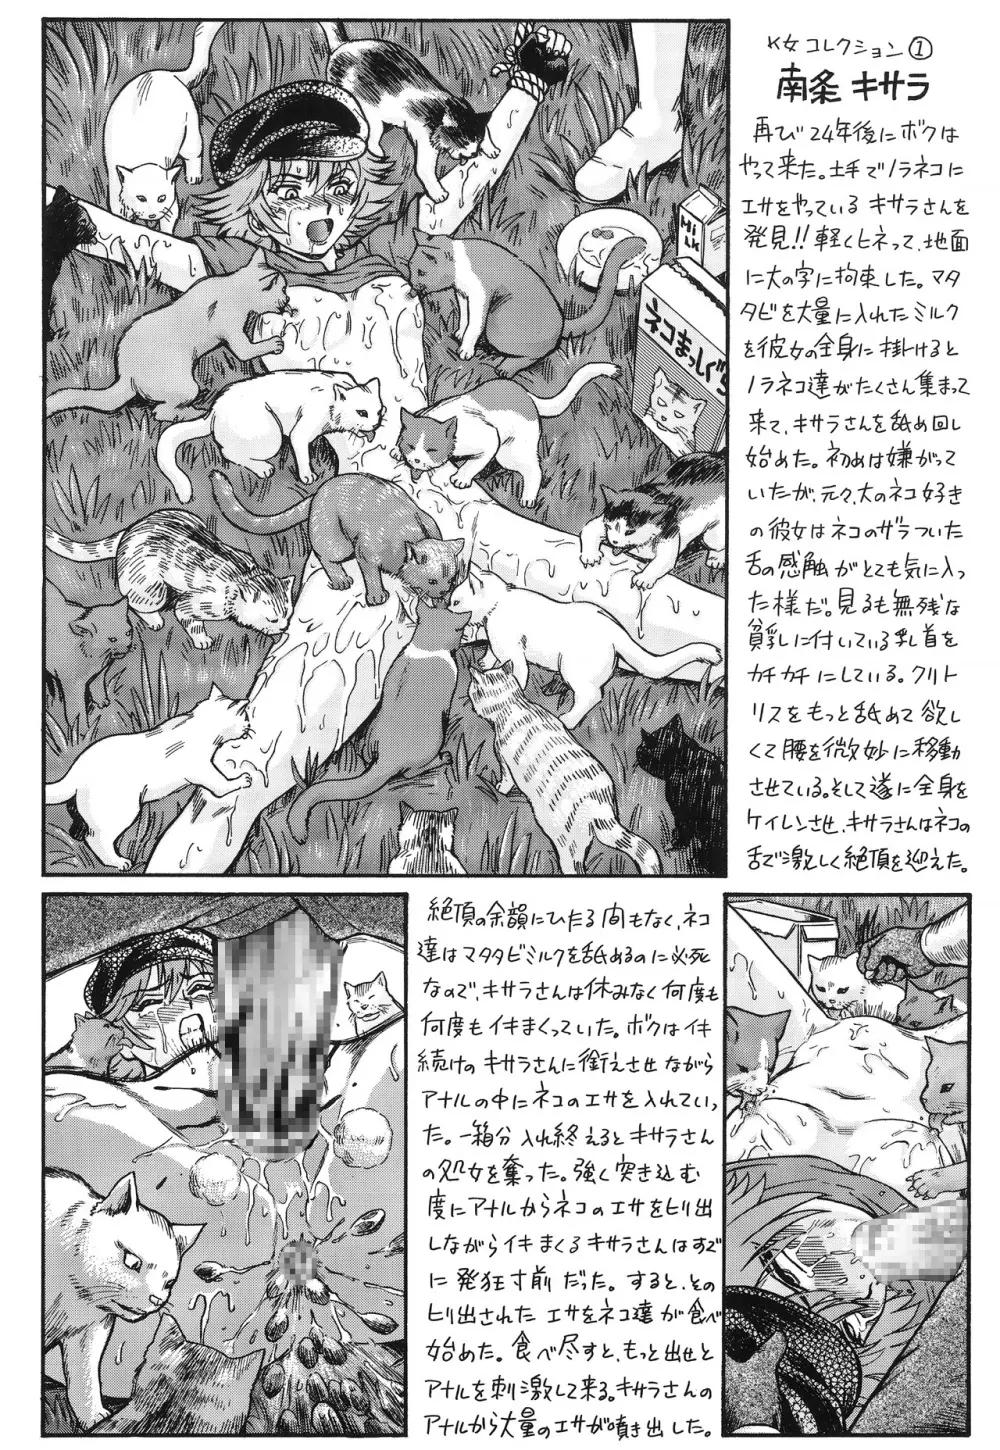 TAIL-MAN MIU FUURINNZI BOOK - page37